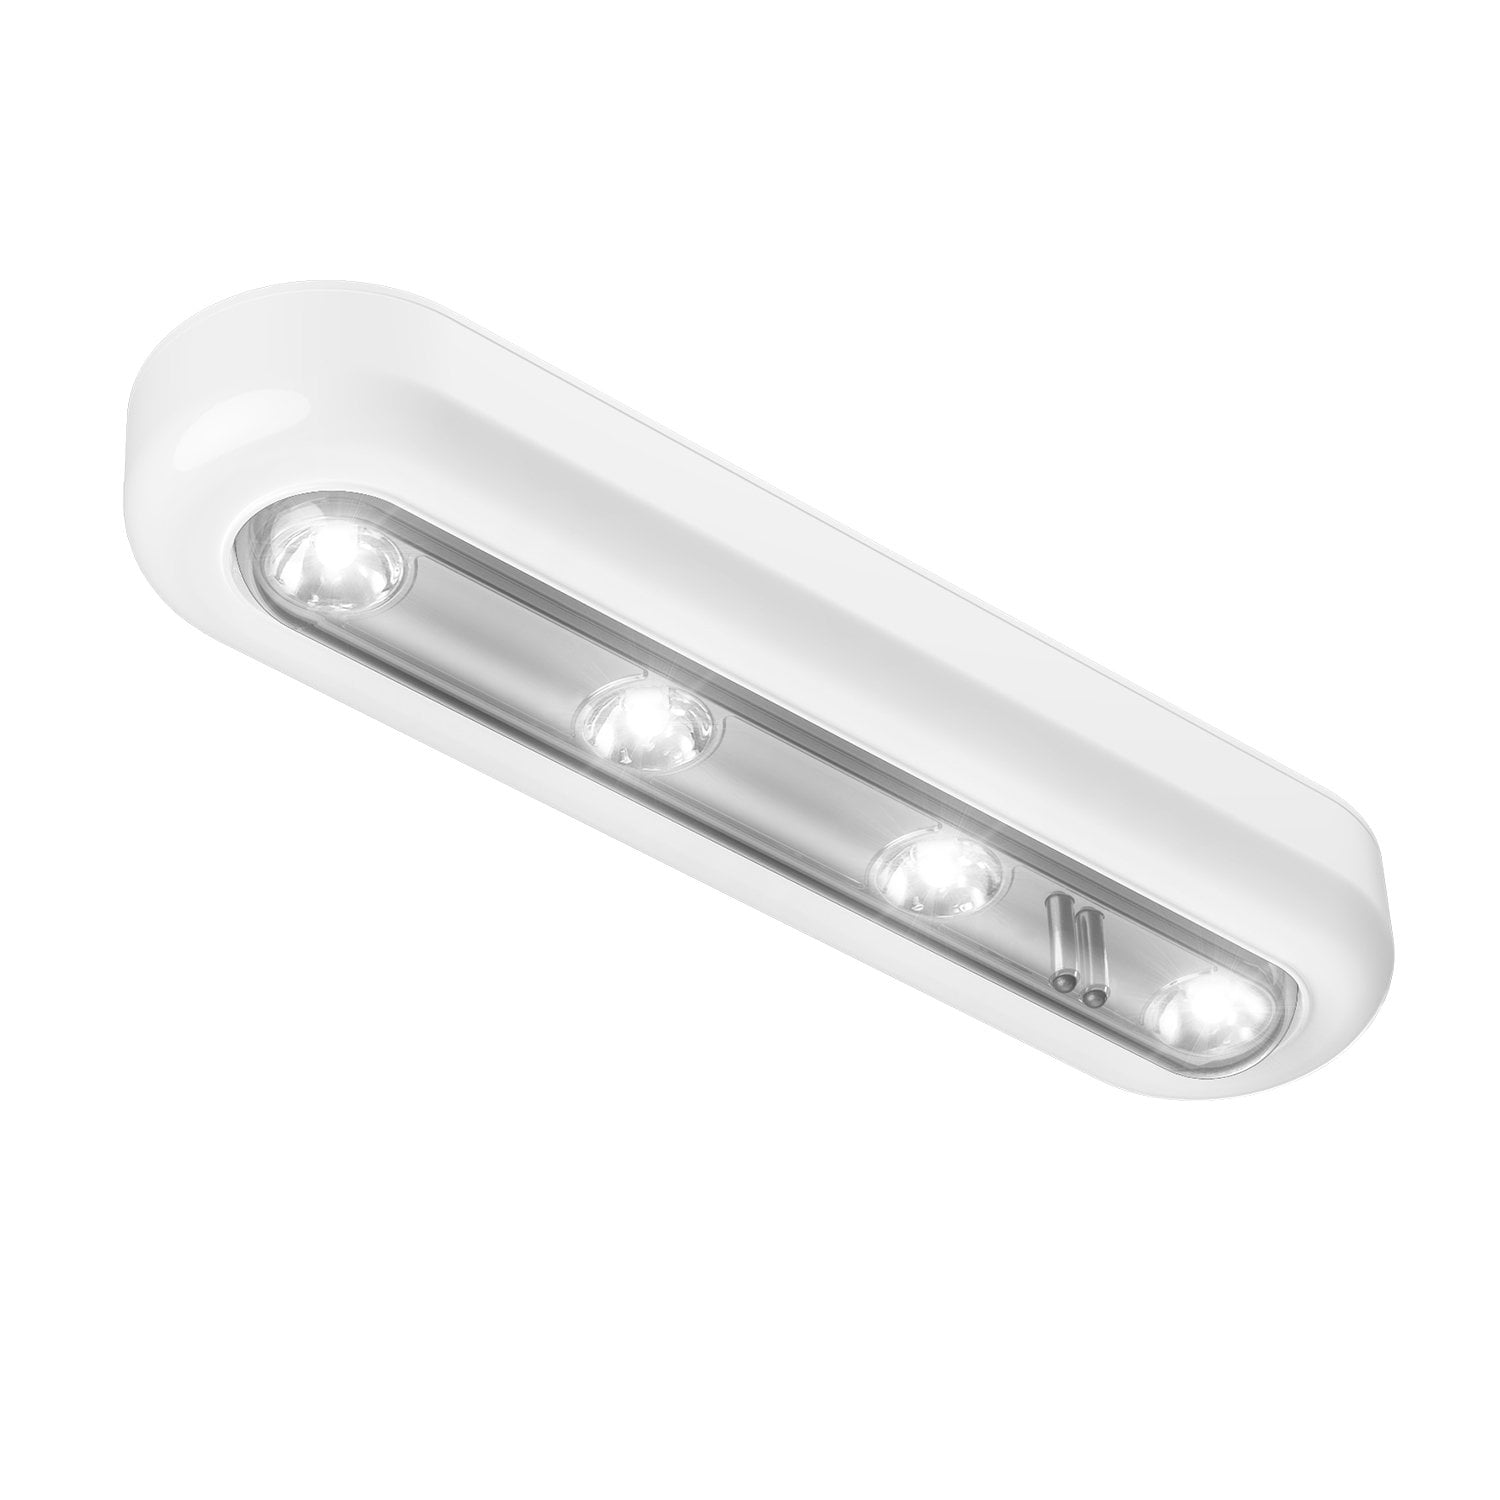 2 X 3 LED Light Stick On Wardrobe Touch Lamp Battery Cabinet Closet Push Tap